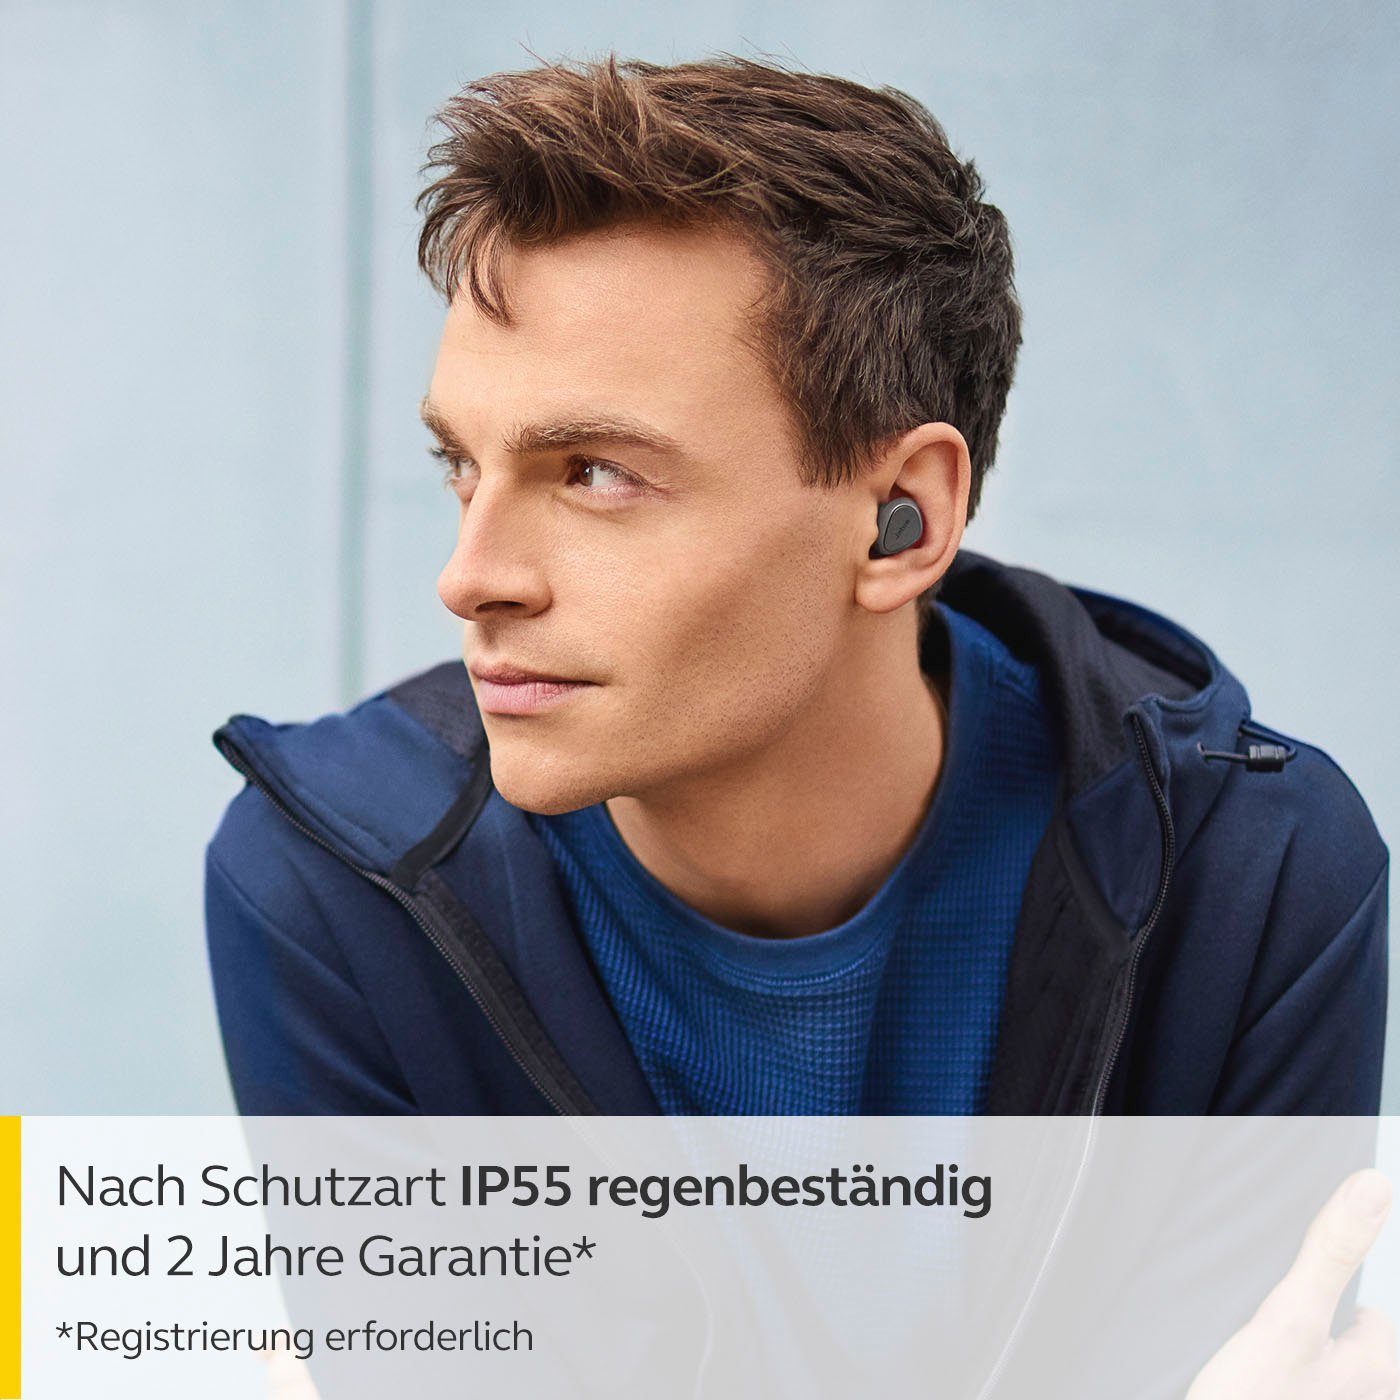 Jabra Elite 3 (Geräuschisolierung, Alexa, In-Ear-Kopfhörer dunkelgrau Assistant, Siri, Google Bluetooth)